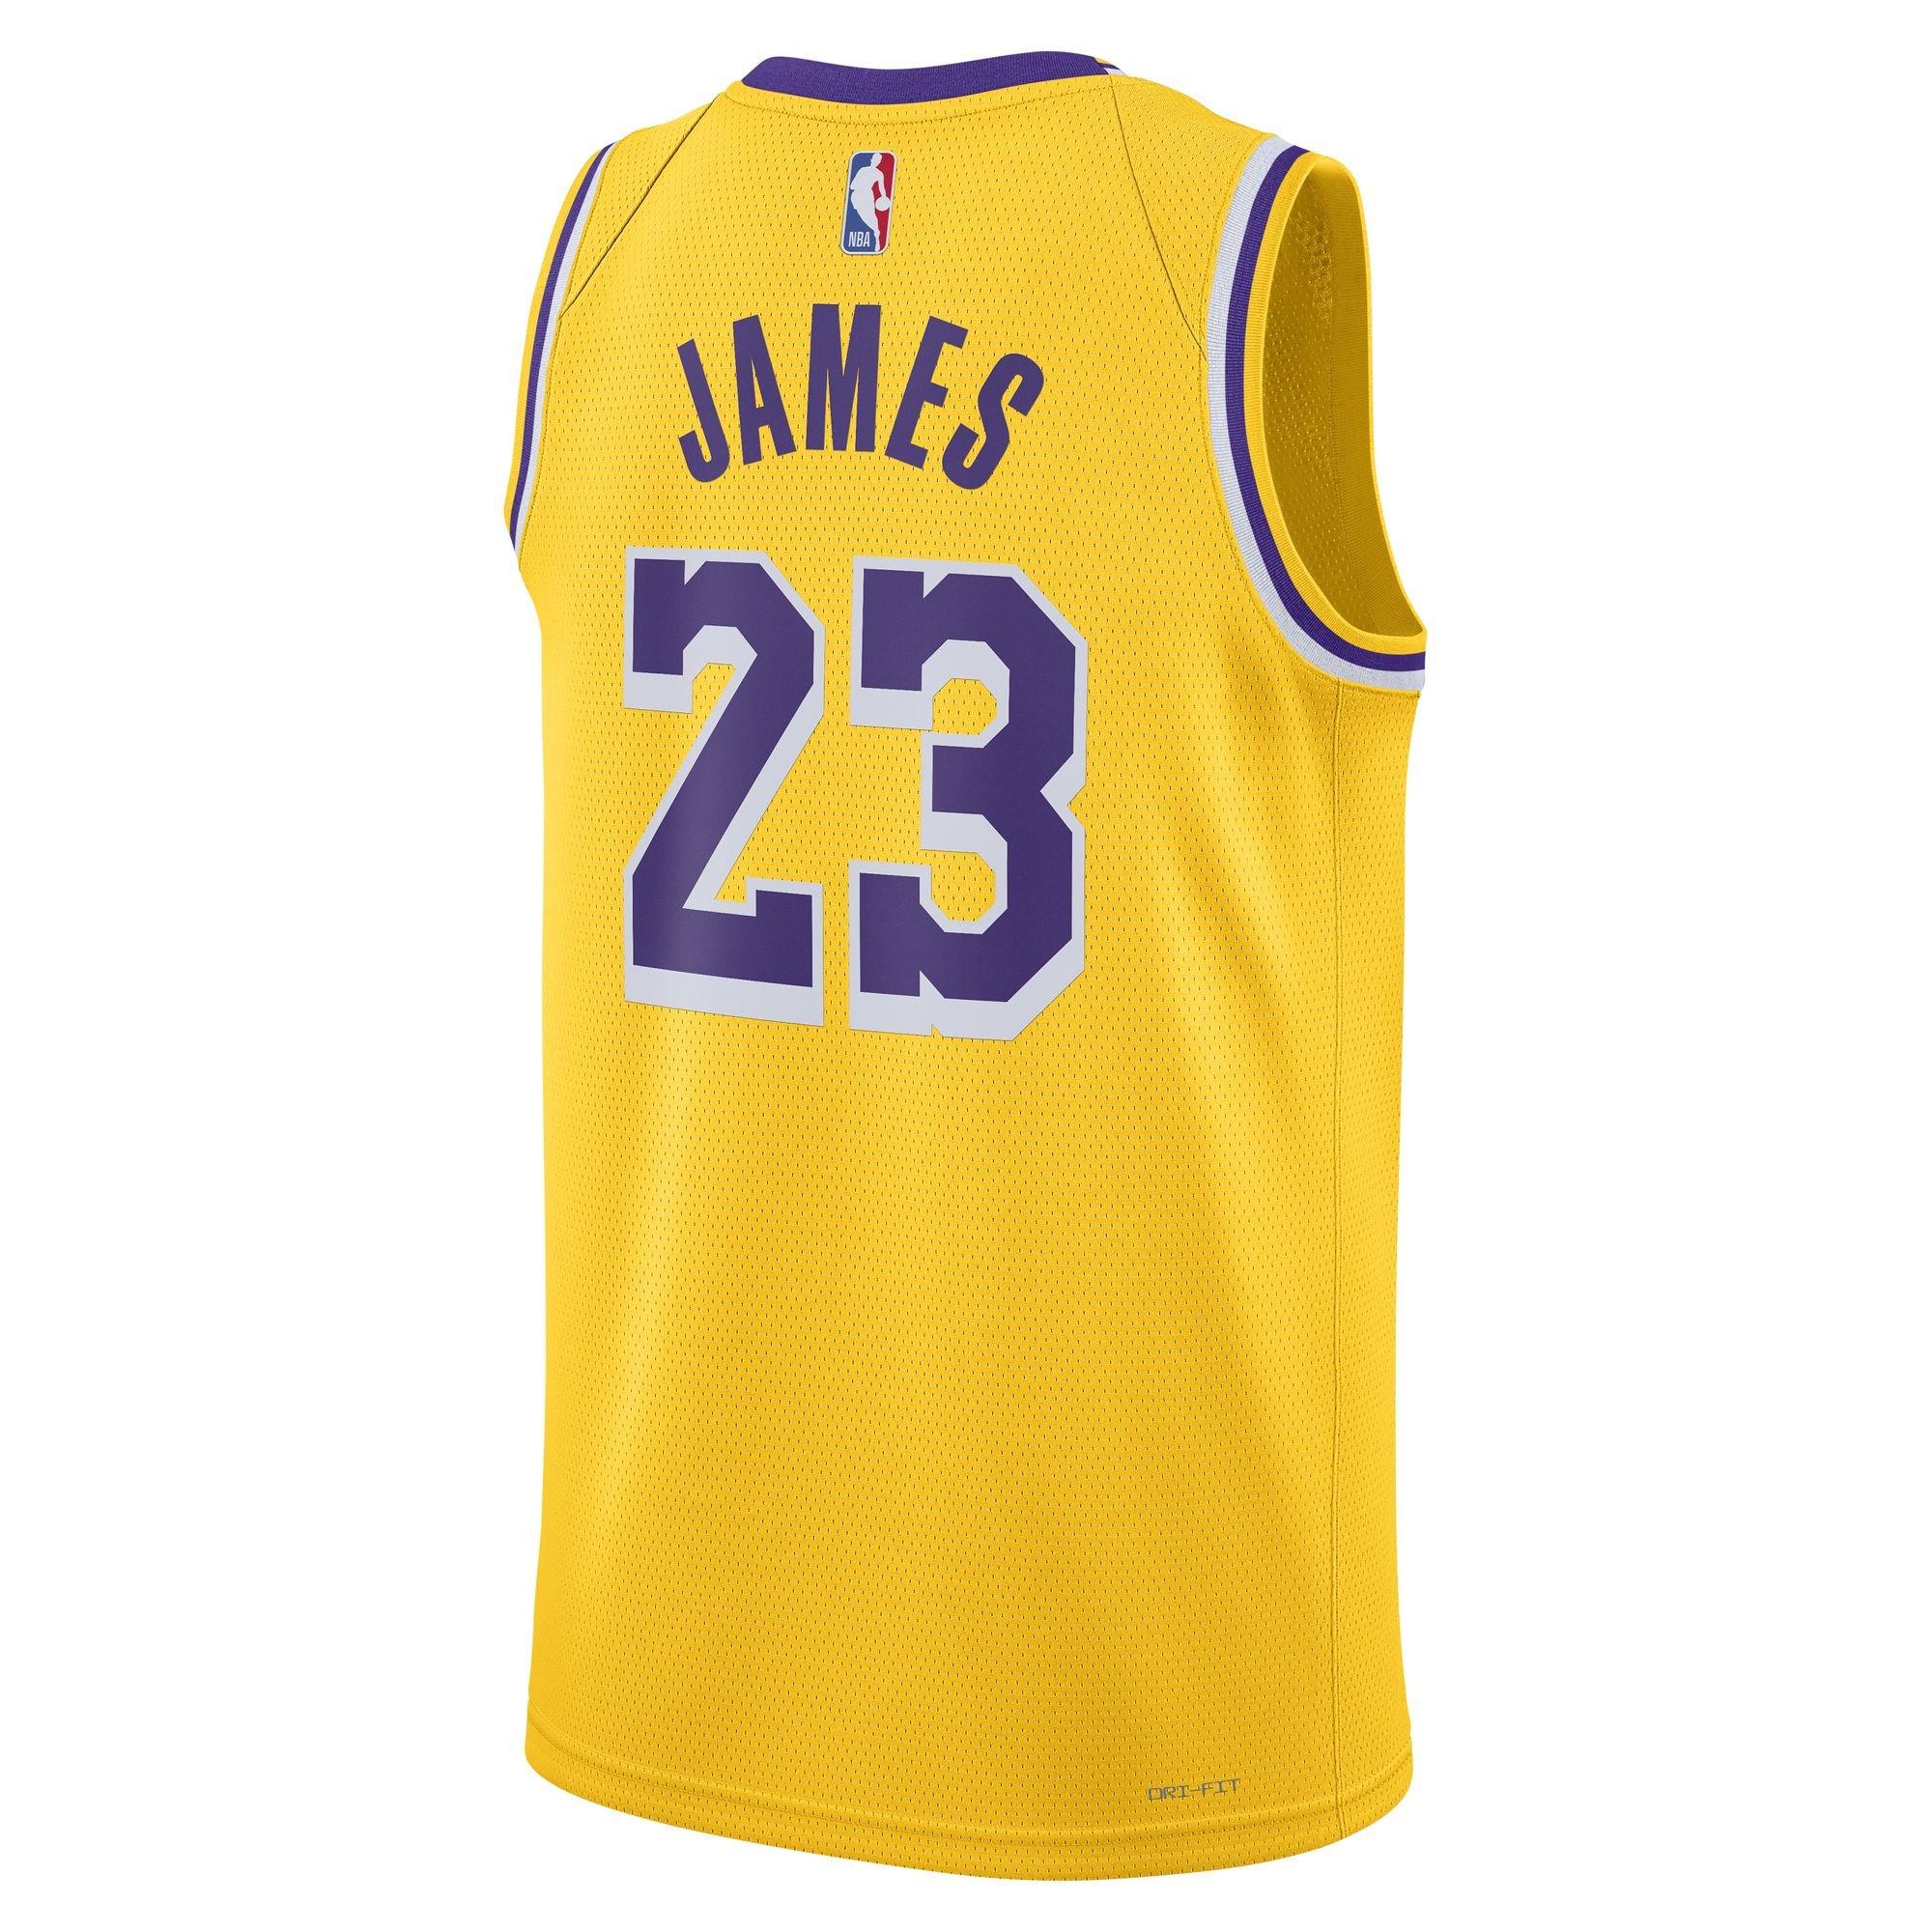 Los Angeles Lakers Nike Gear, Lakers Nike Jerseys, Polos, Shirts